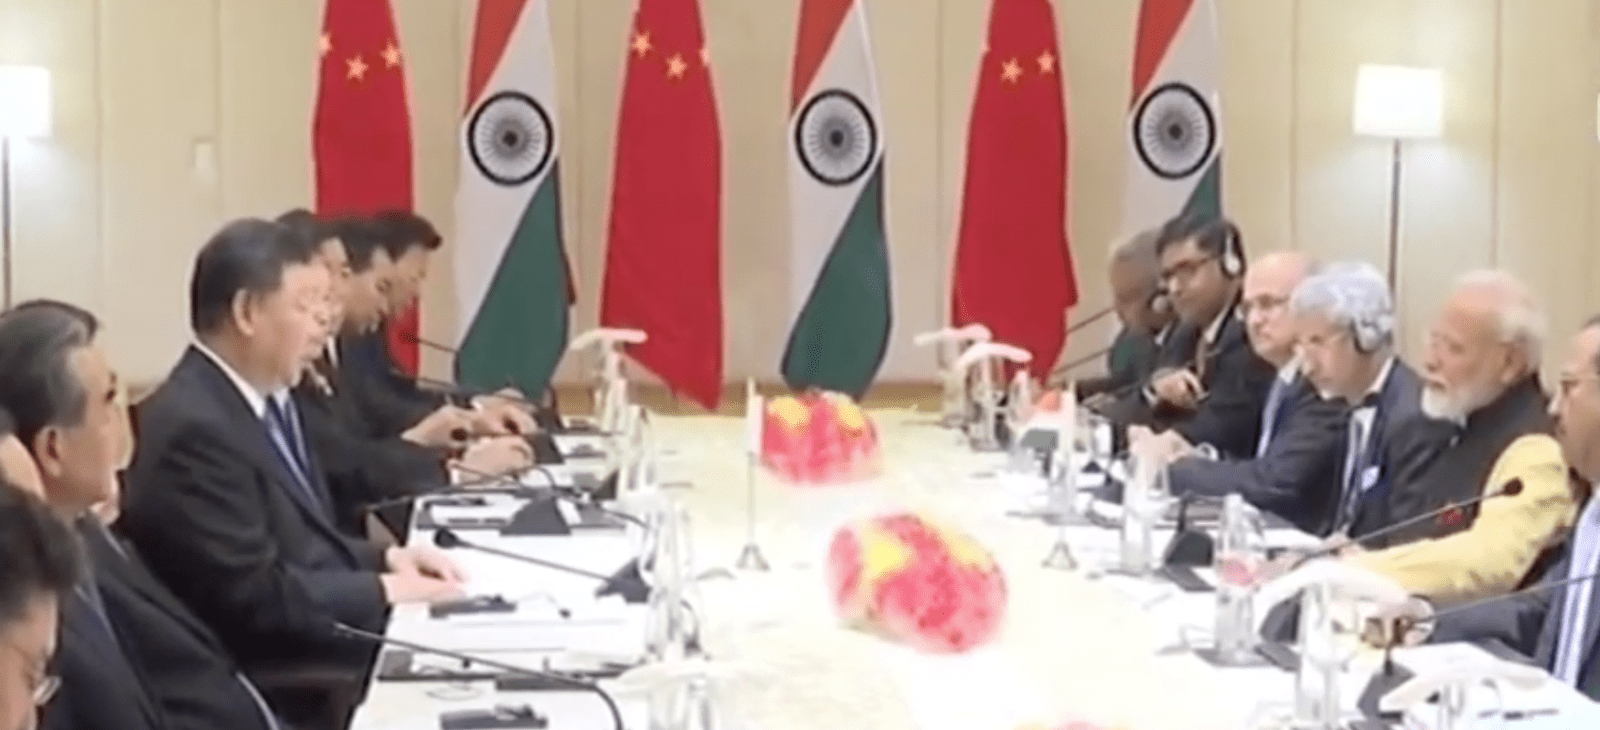 Xi Jinping’s 2nd Informal Summit with Modi